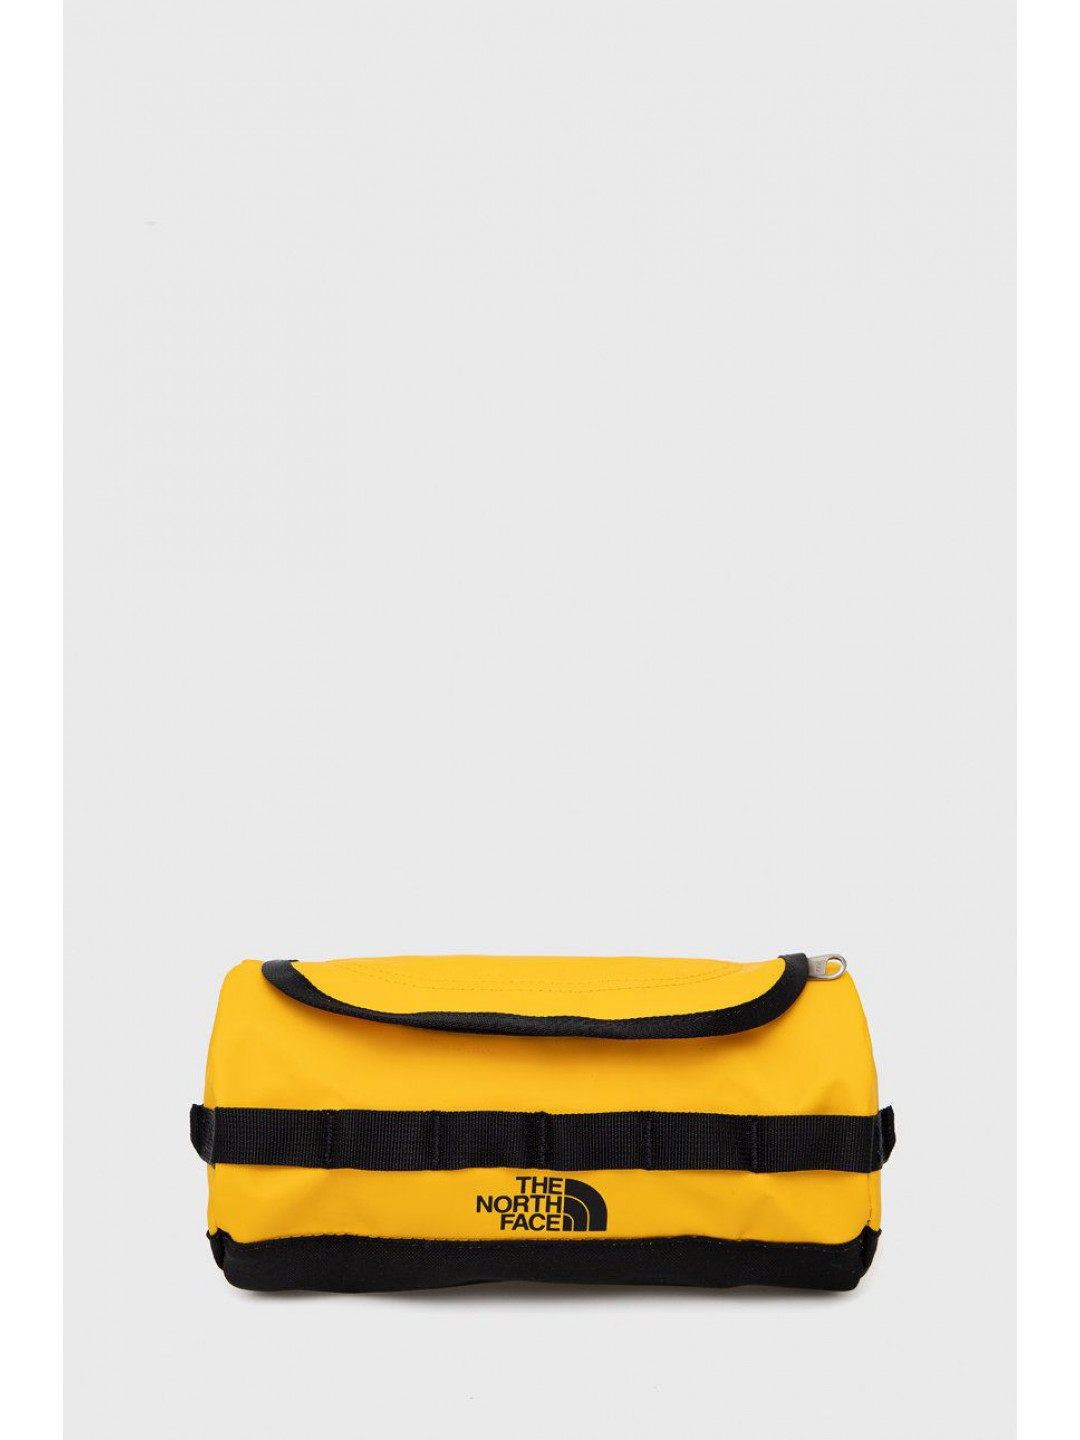 Kosmetická taška The North Face žlutá barva NF0A52TGZU31